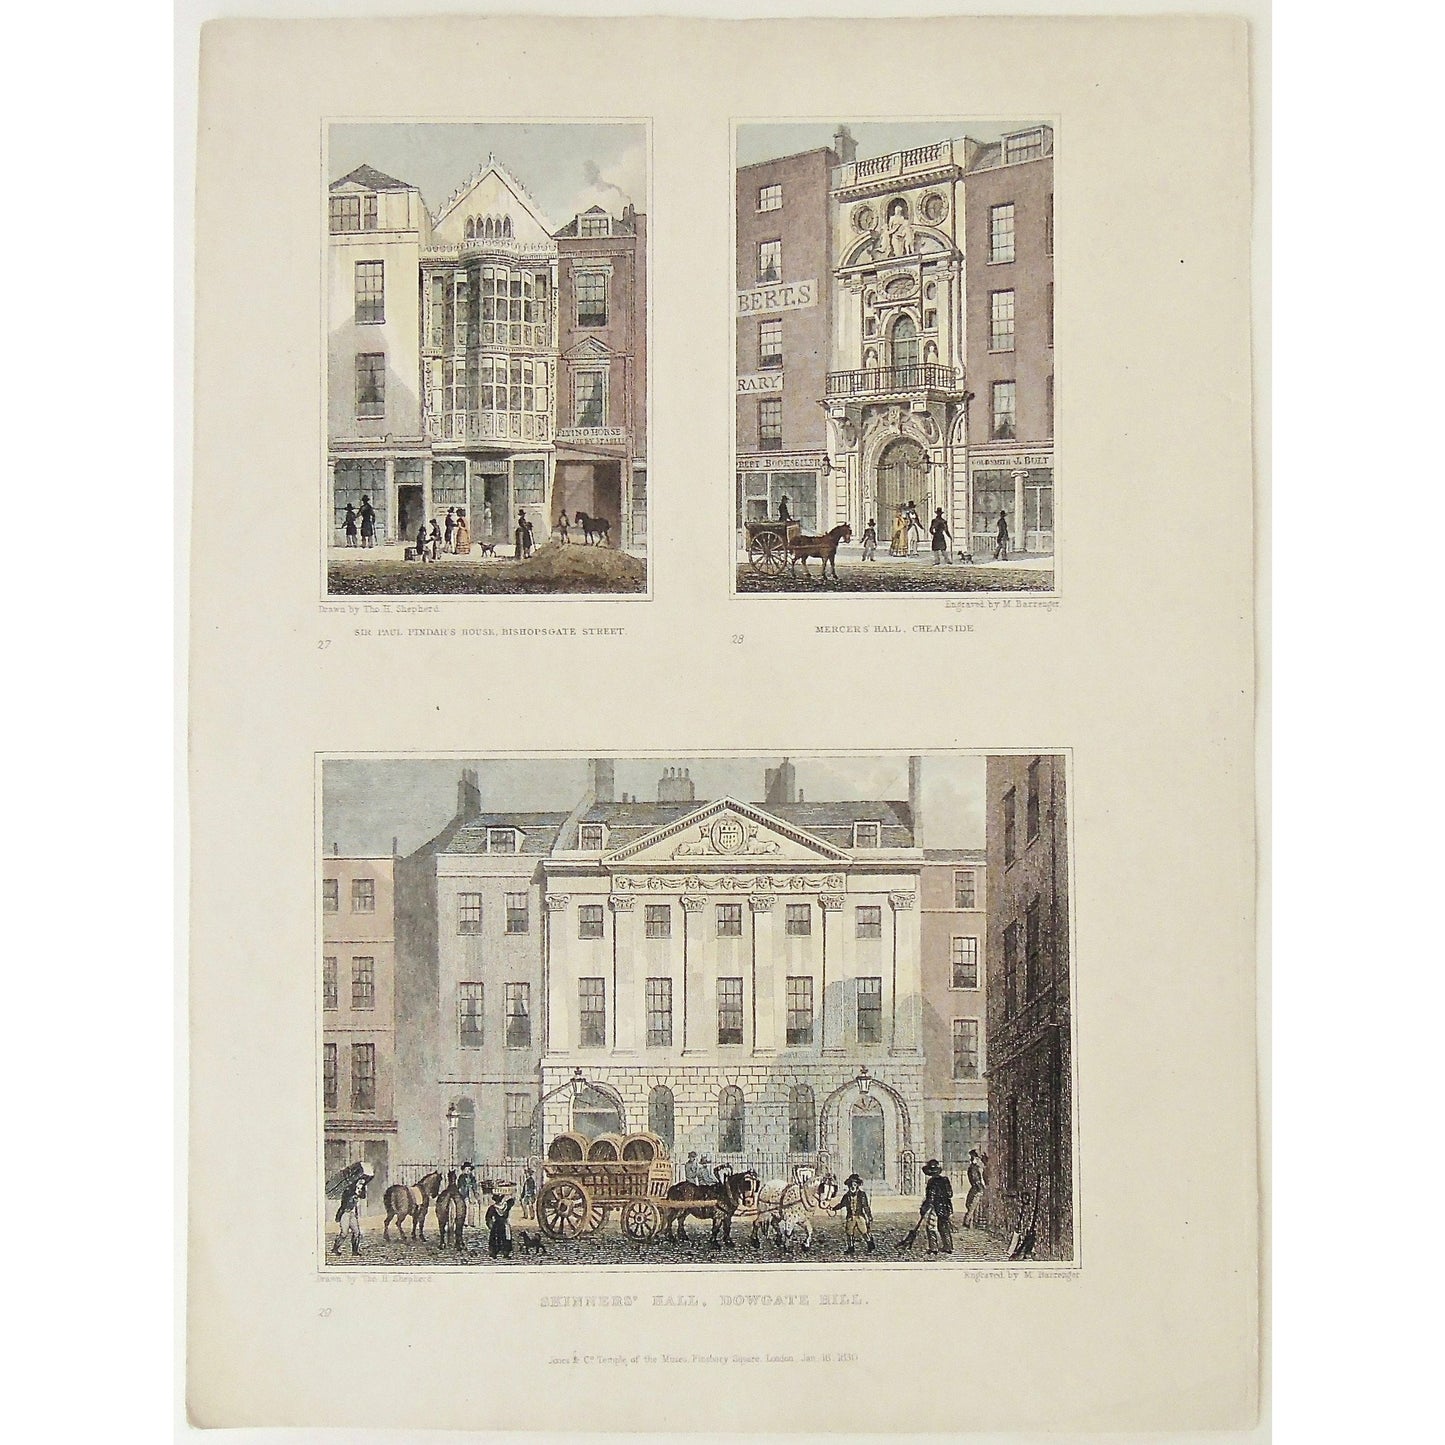 Sir Paul Pindar's House, Bishopsgate Street. / Mercer's Hall, Cheapside. / Skinners' Hall, Dowgate Hill.  (S2-40)